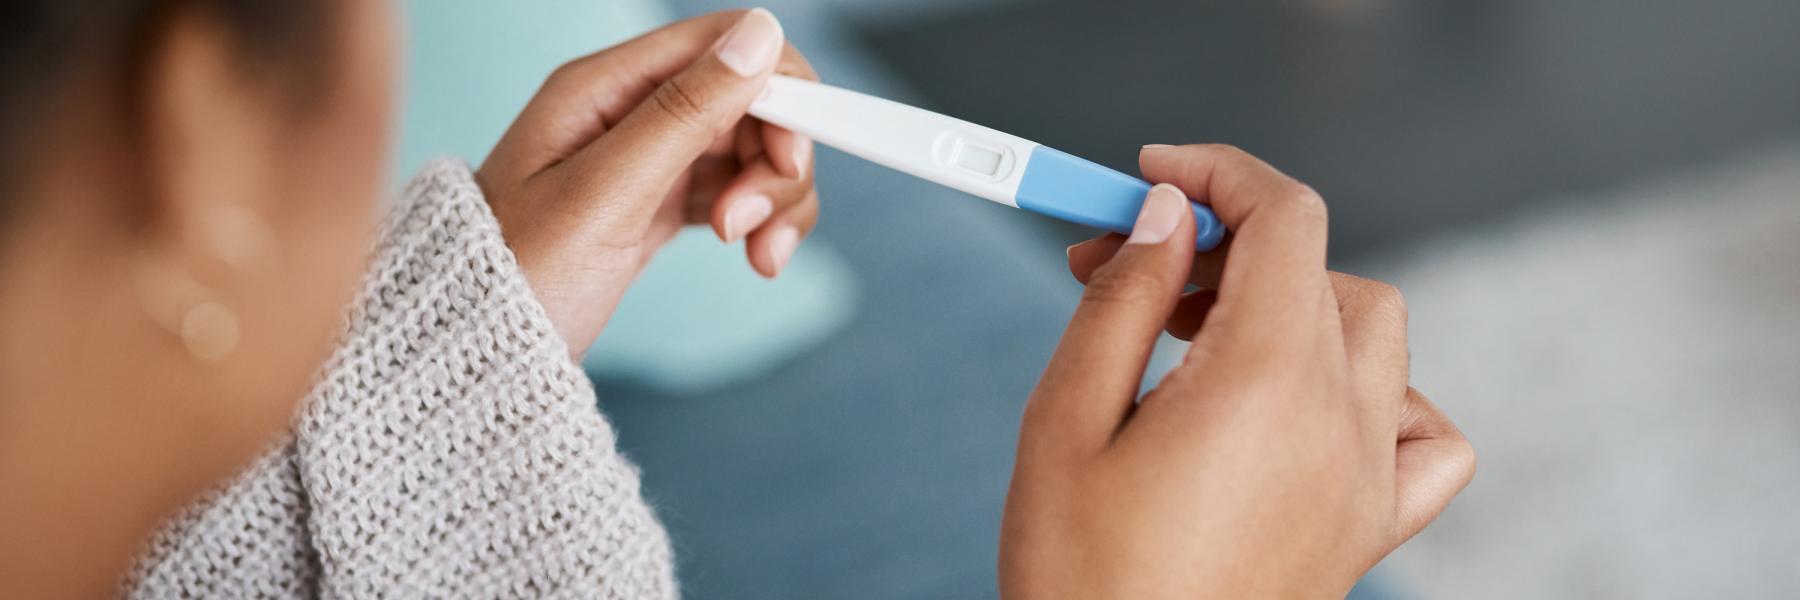 Checking pregnancy test